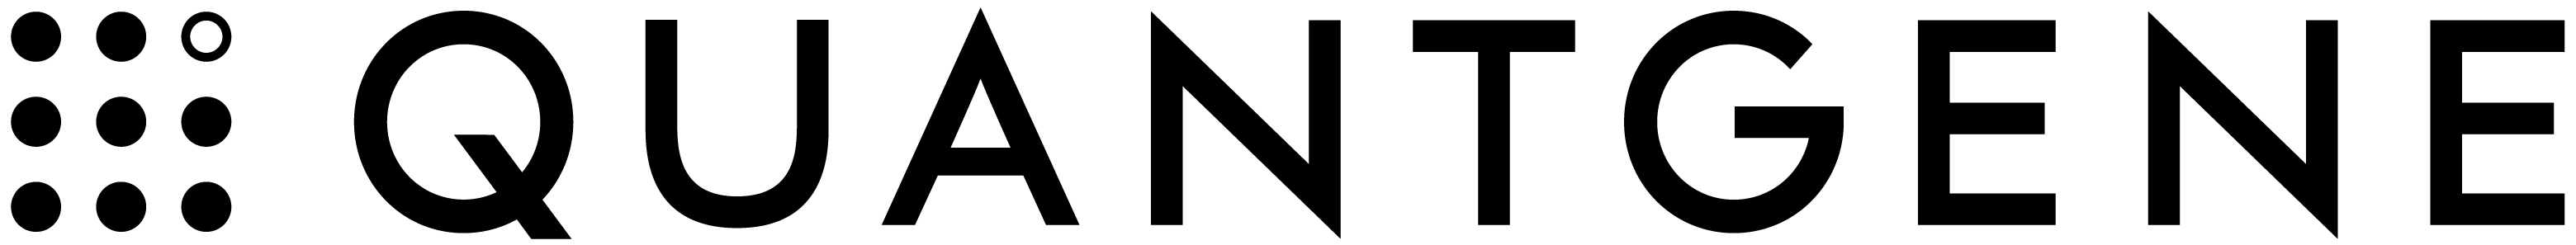 Quantgene Logo